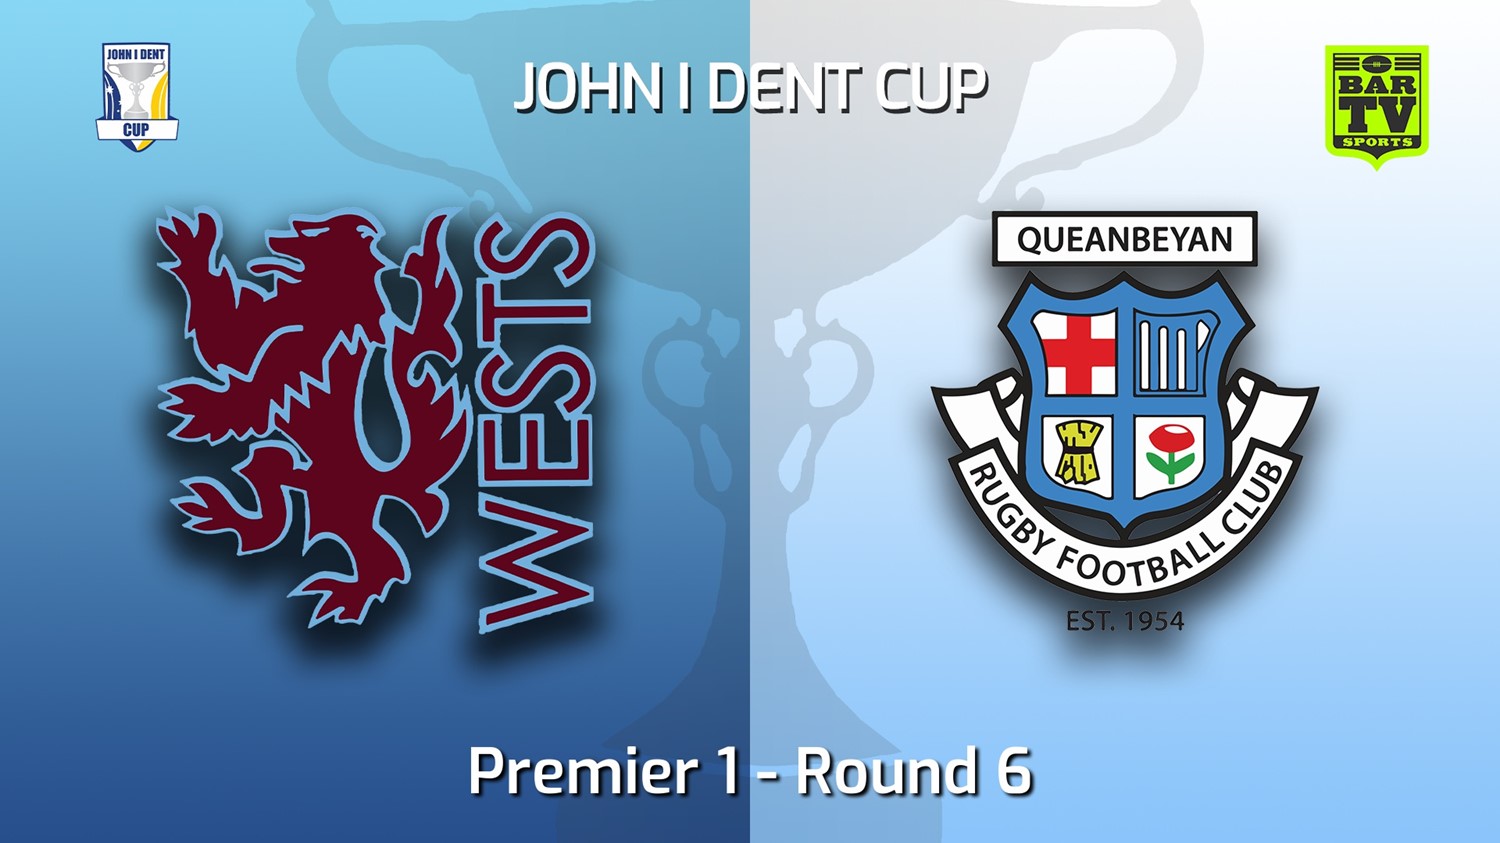 220528-John I Dent (ACT) Round 6 - Premier 1 - Wests Lions v Queanbeyan Whites Slate Image